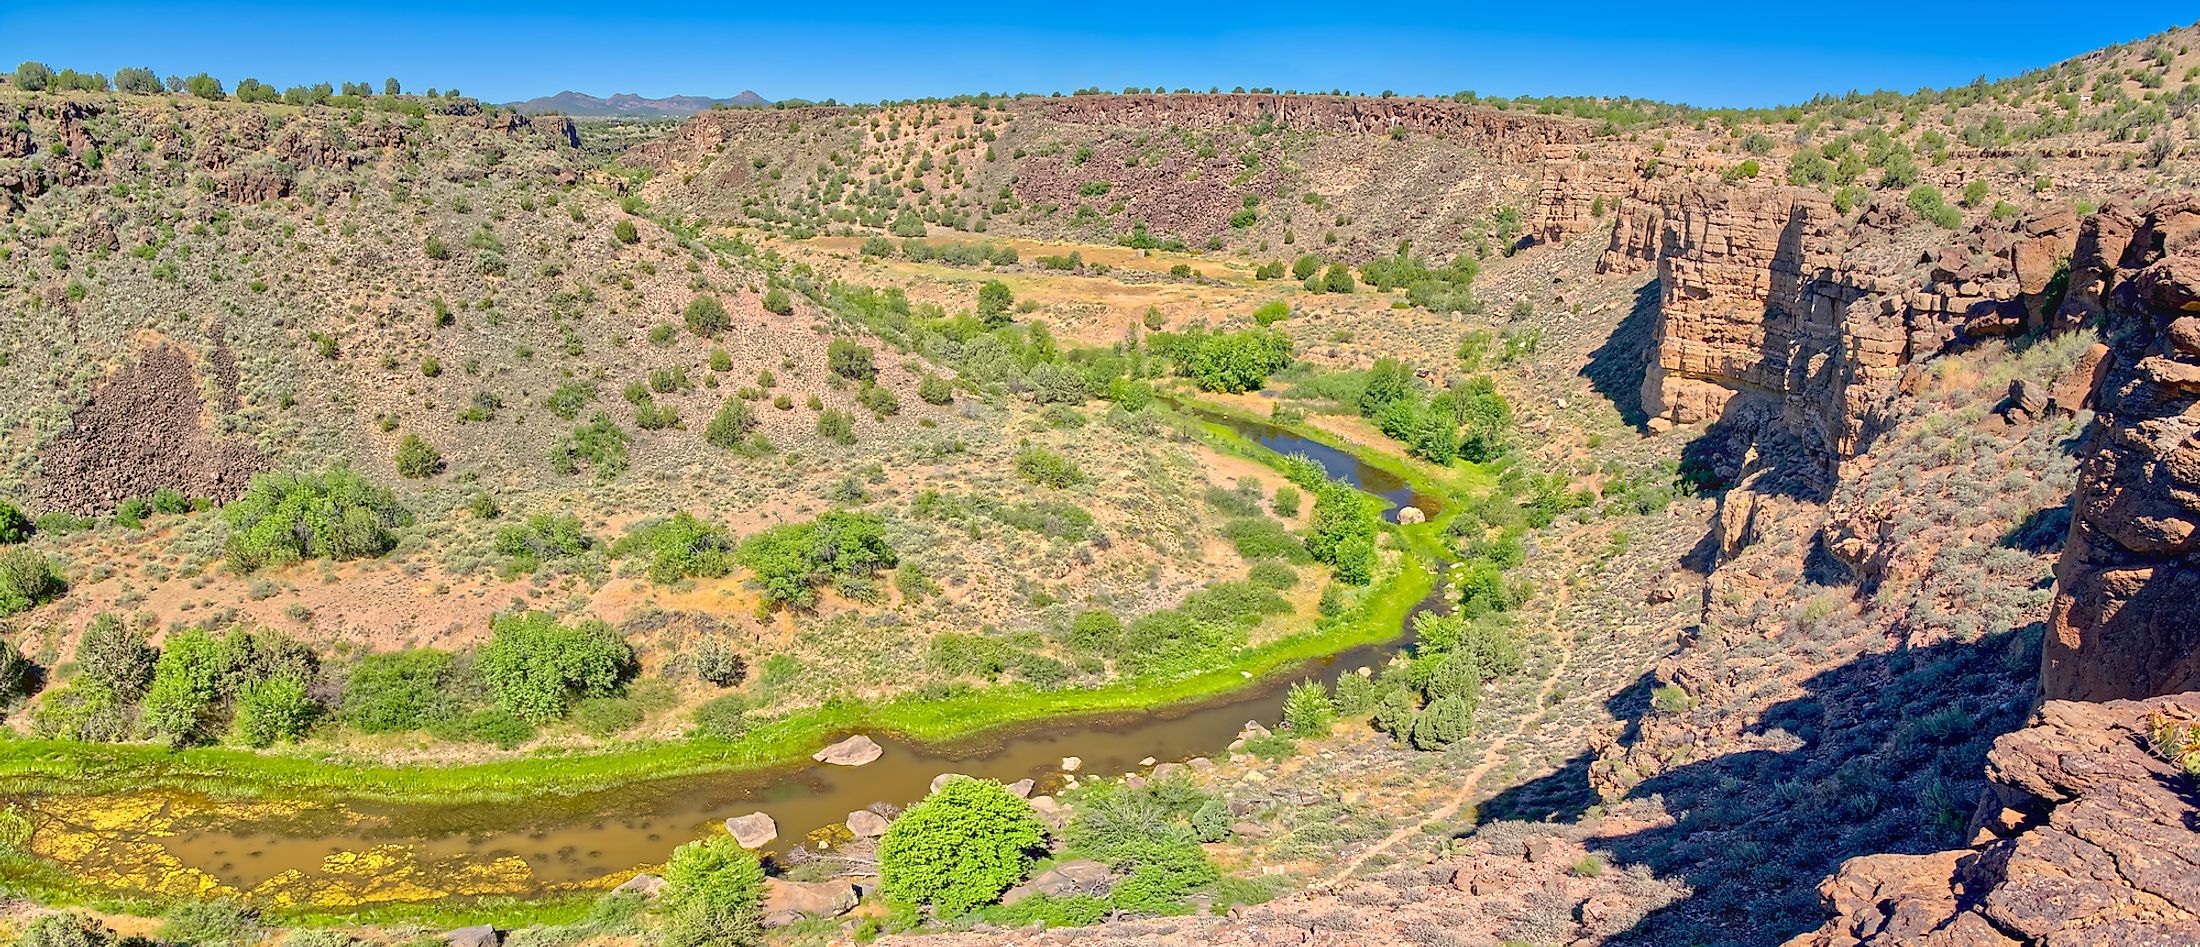 Panorama of the Upper Verde River Canyon near Paulden, Arizona.